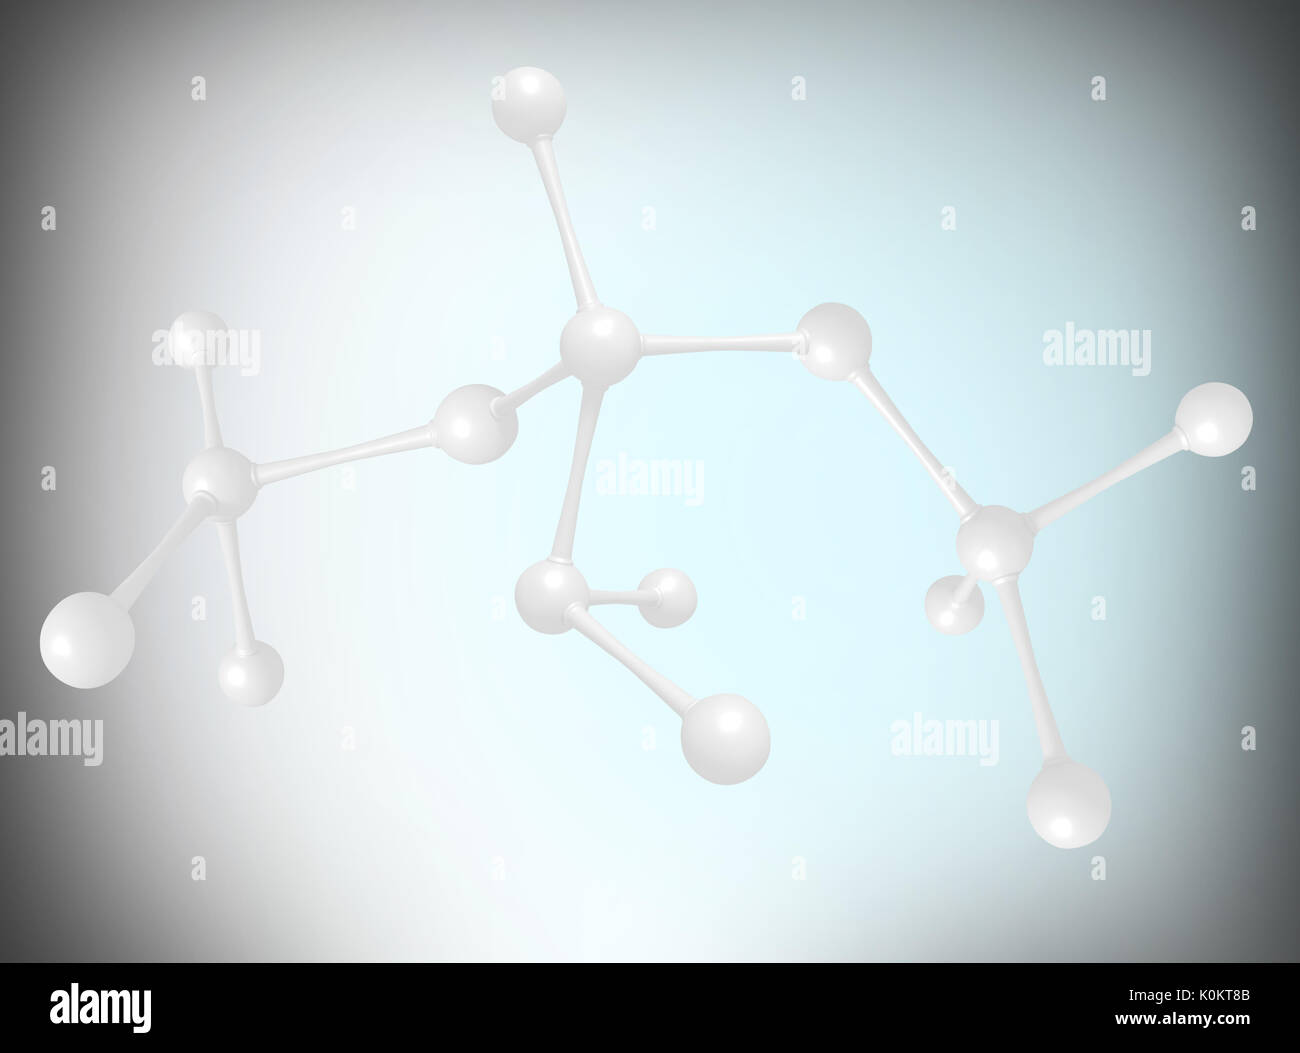 Blaues Glas Molekülstruktur. 3D-Rendering Stockfotografie - Alamy